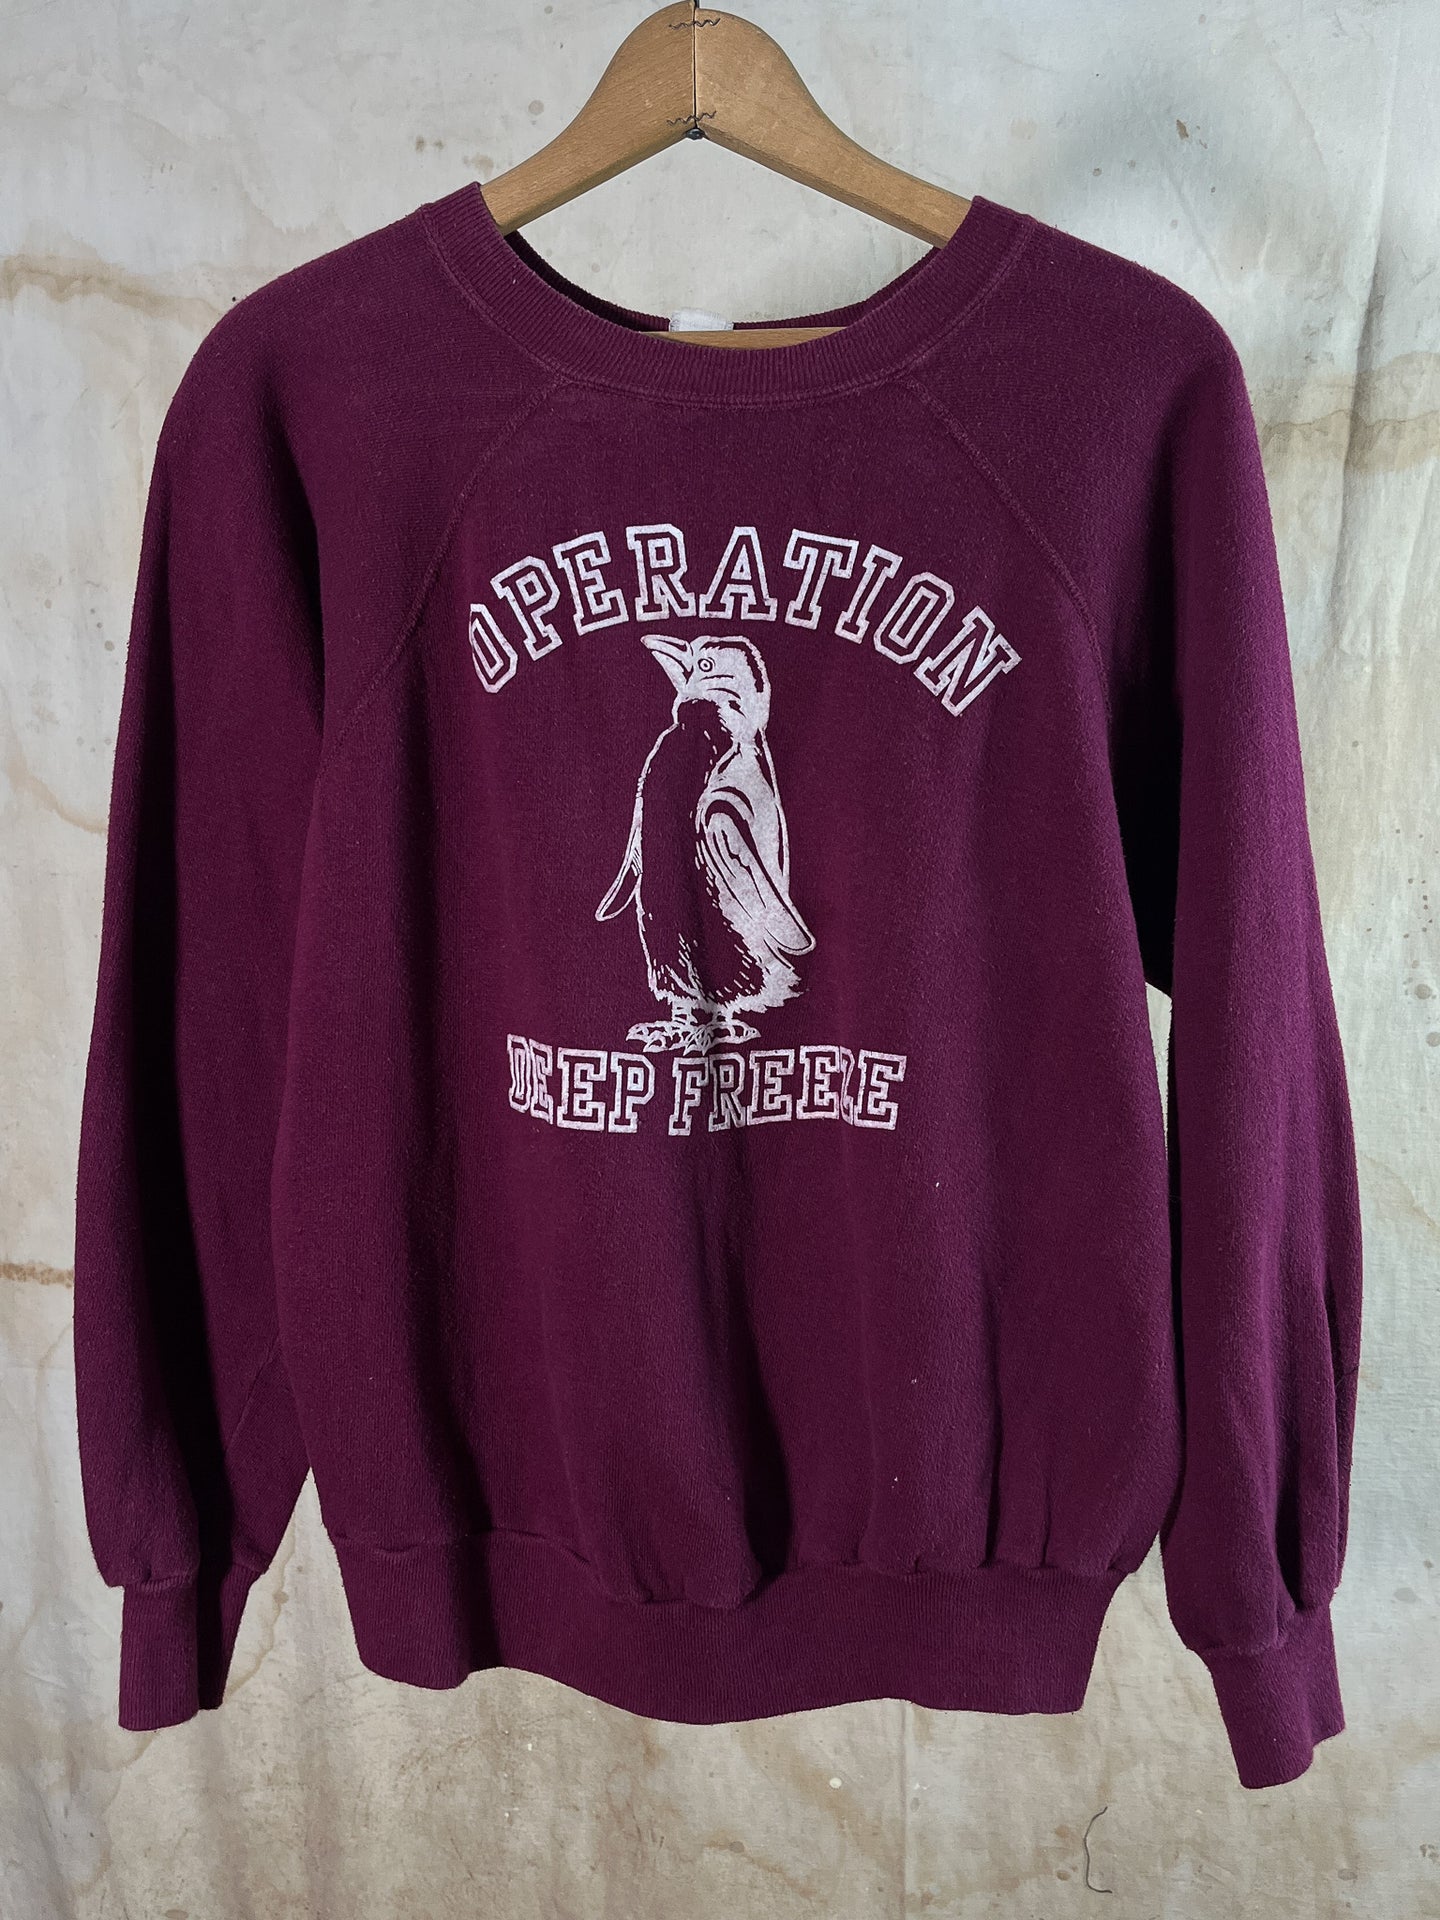 Operation Deep Freeze Flocked Burgundy Sweatshirt c. 1960s